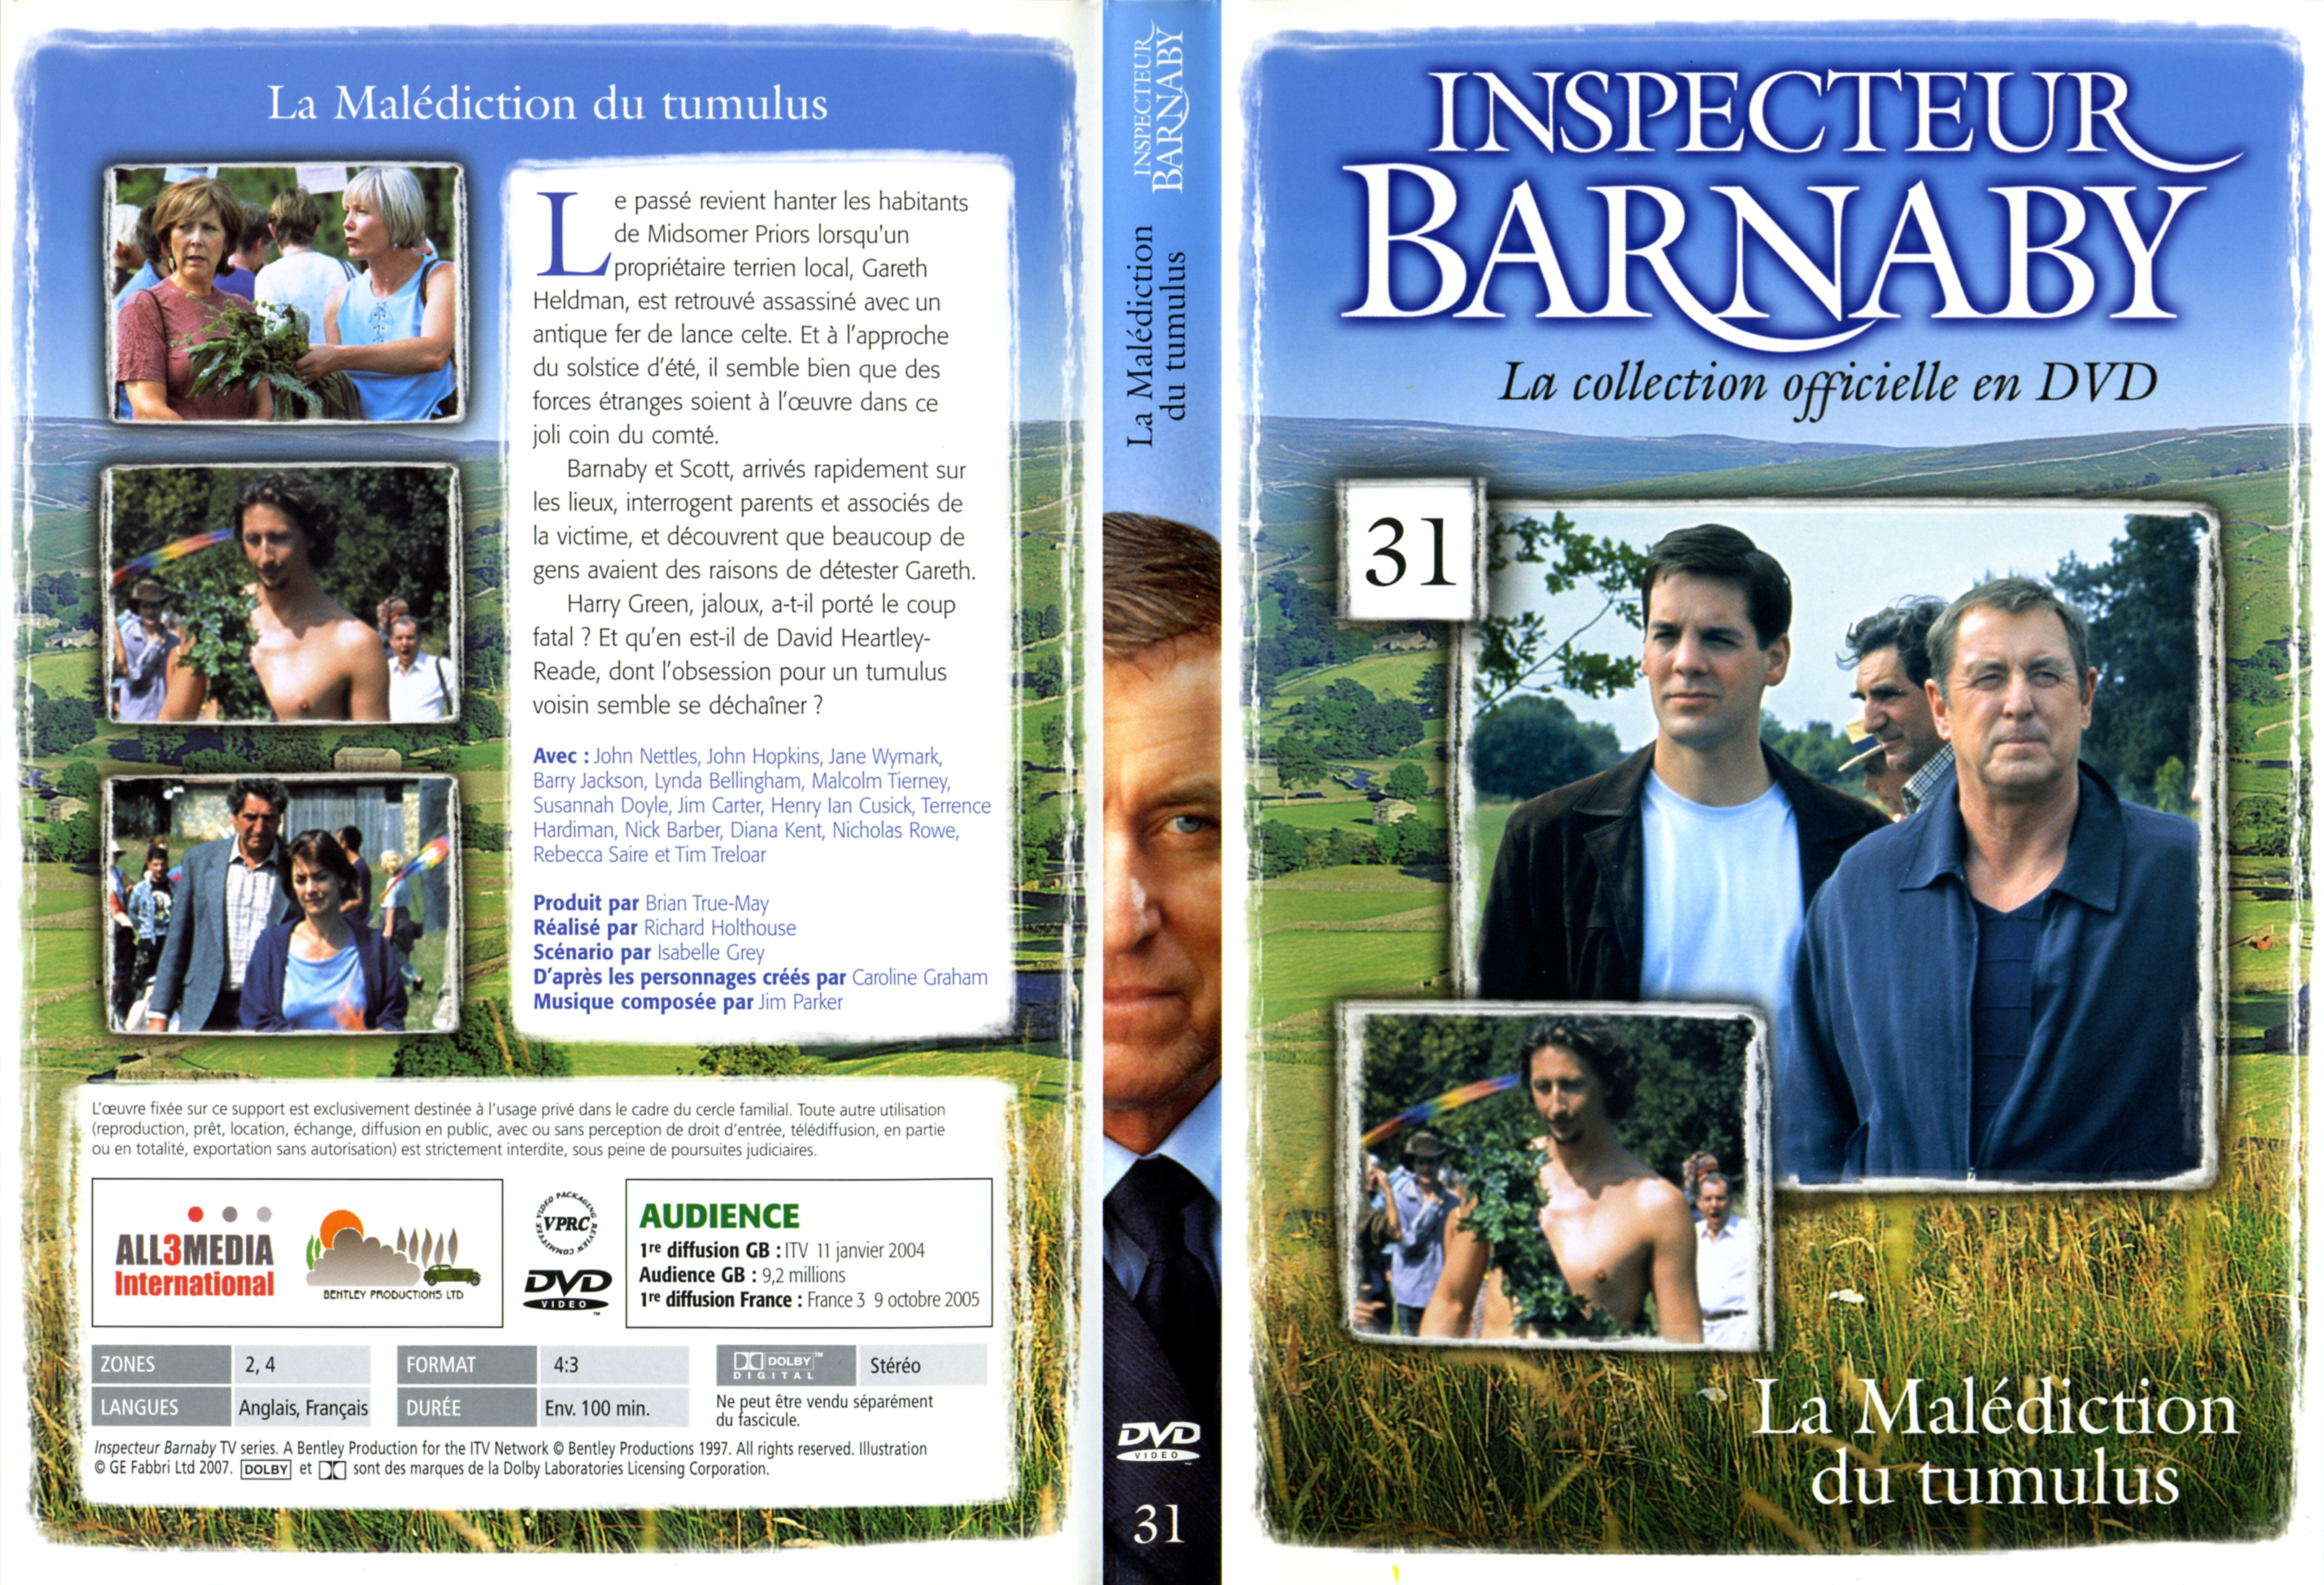 Jaquette DVD Barnaby vol 31 - La Maldiction du tumulus